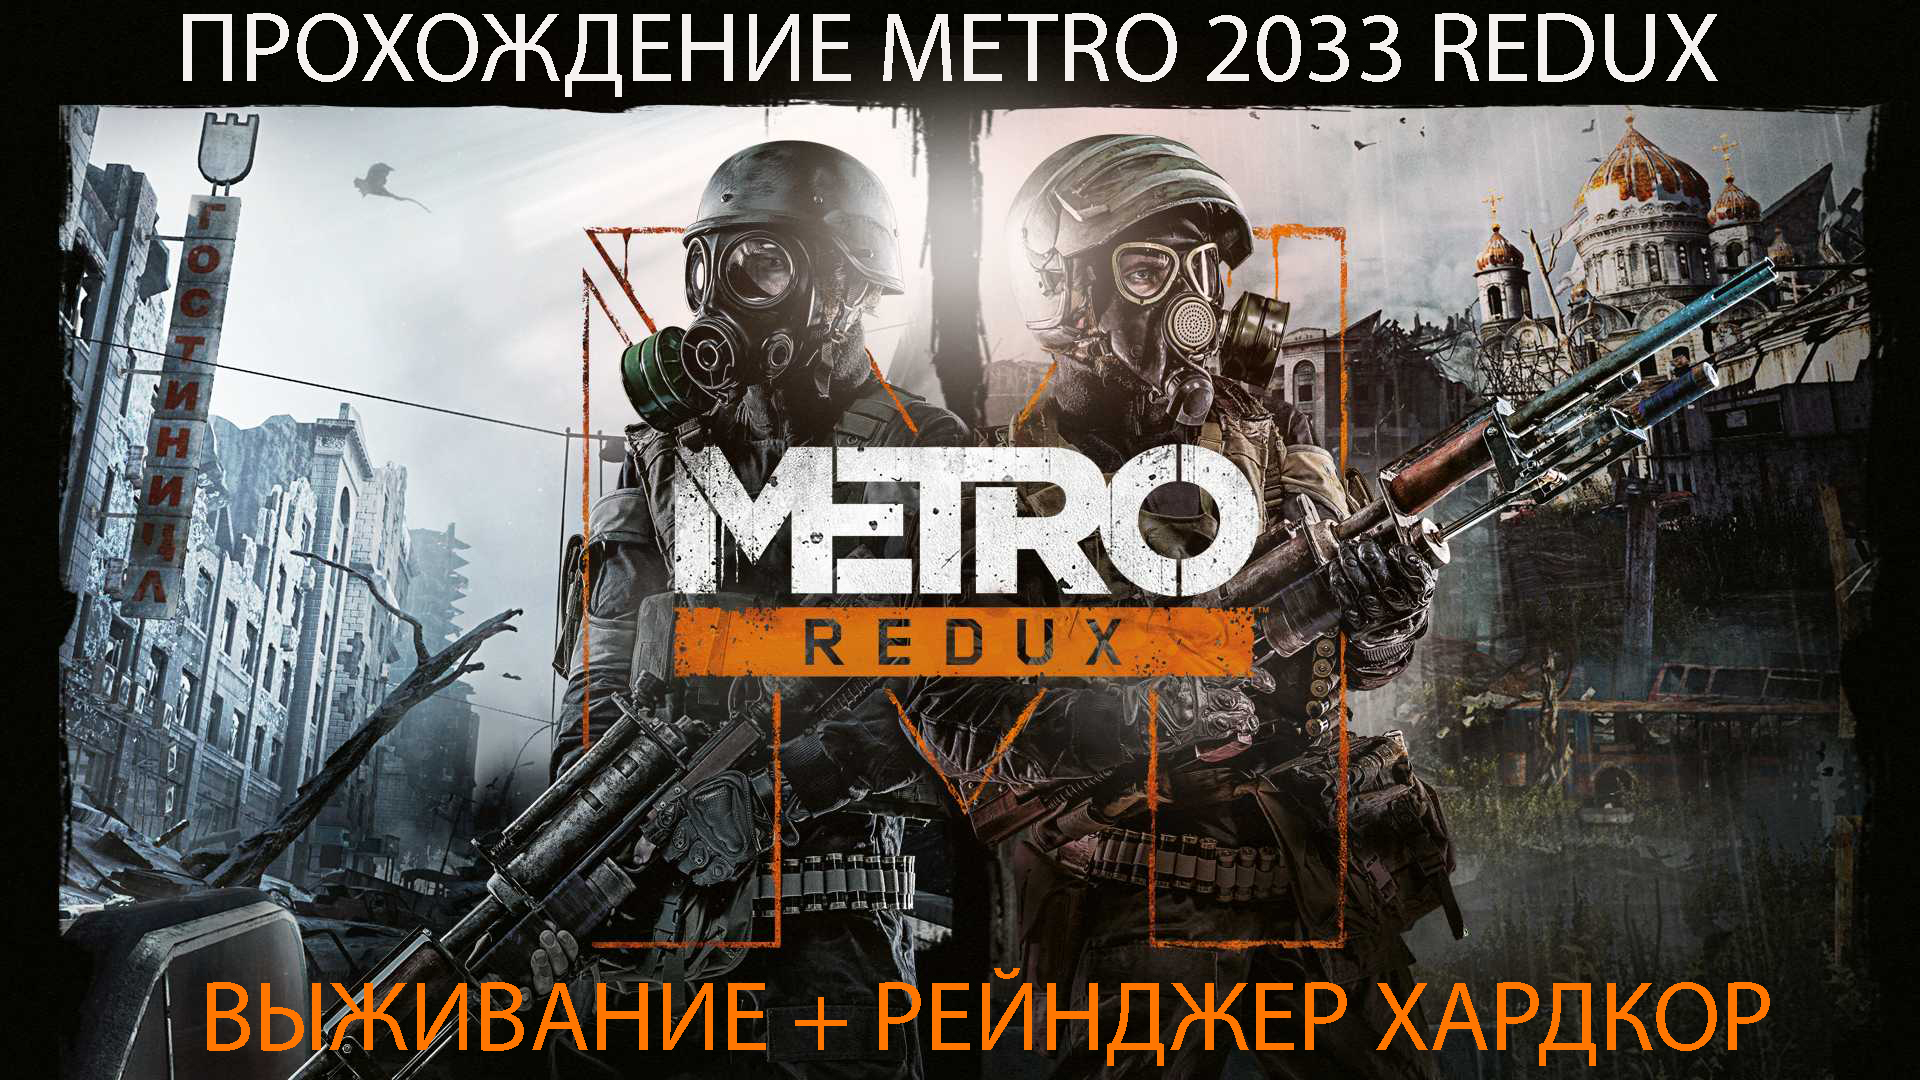 Прохождение Metro 2033 Redux I - Начало с конца, Завязка - Рейнджер Хардкор.mp4